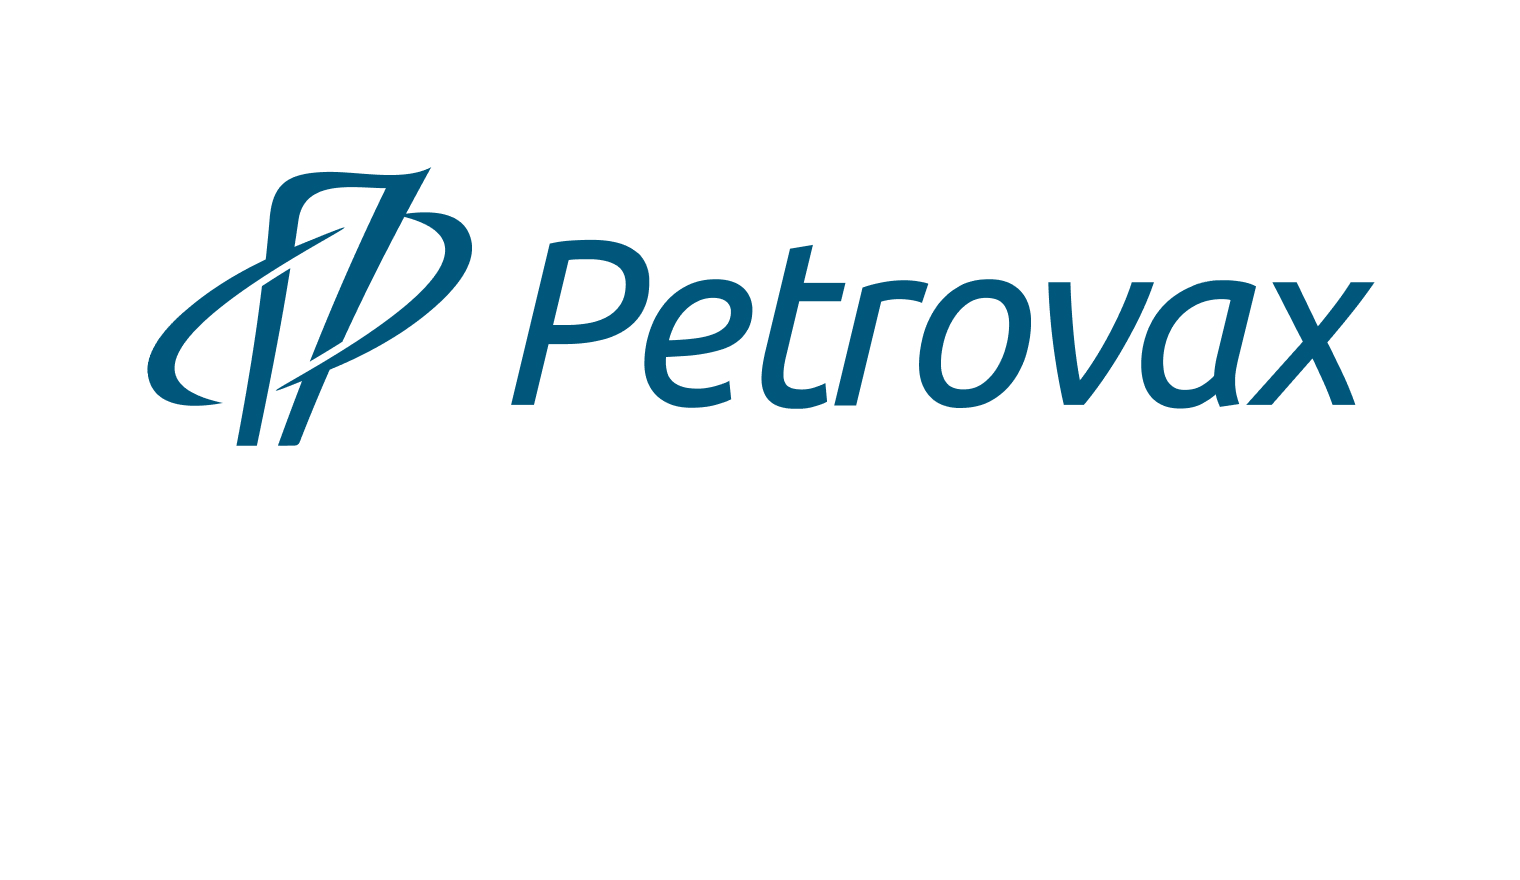 Petrovax restyles its logo